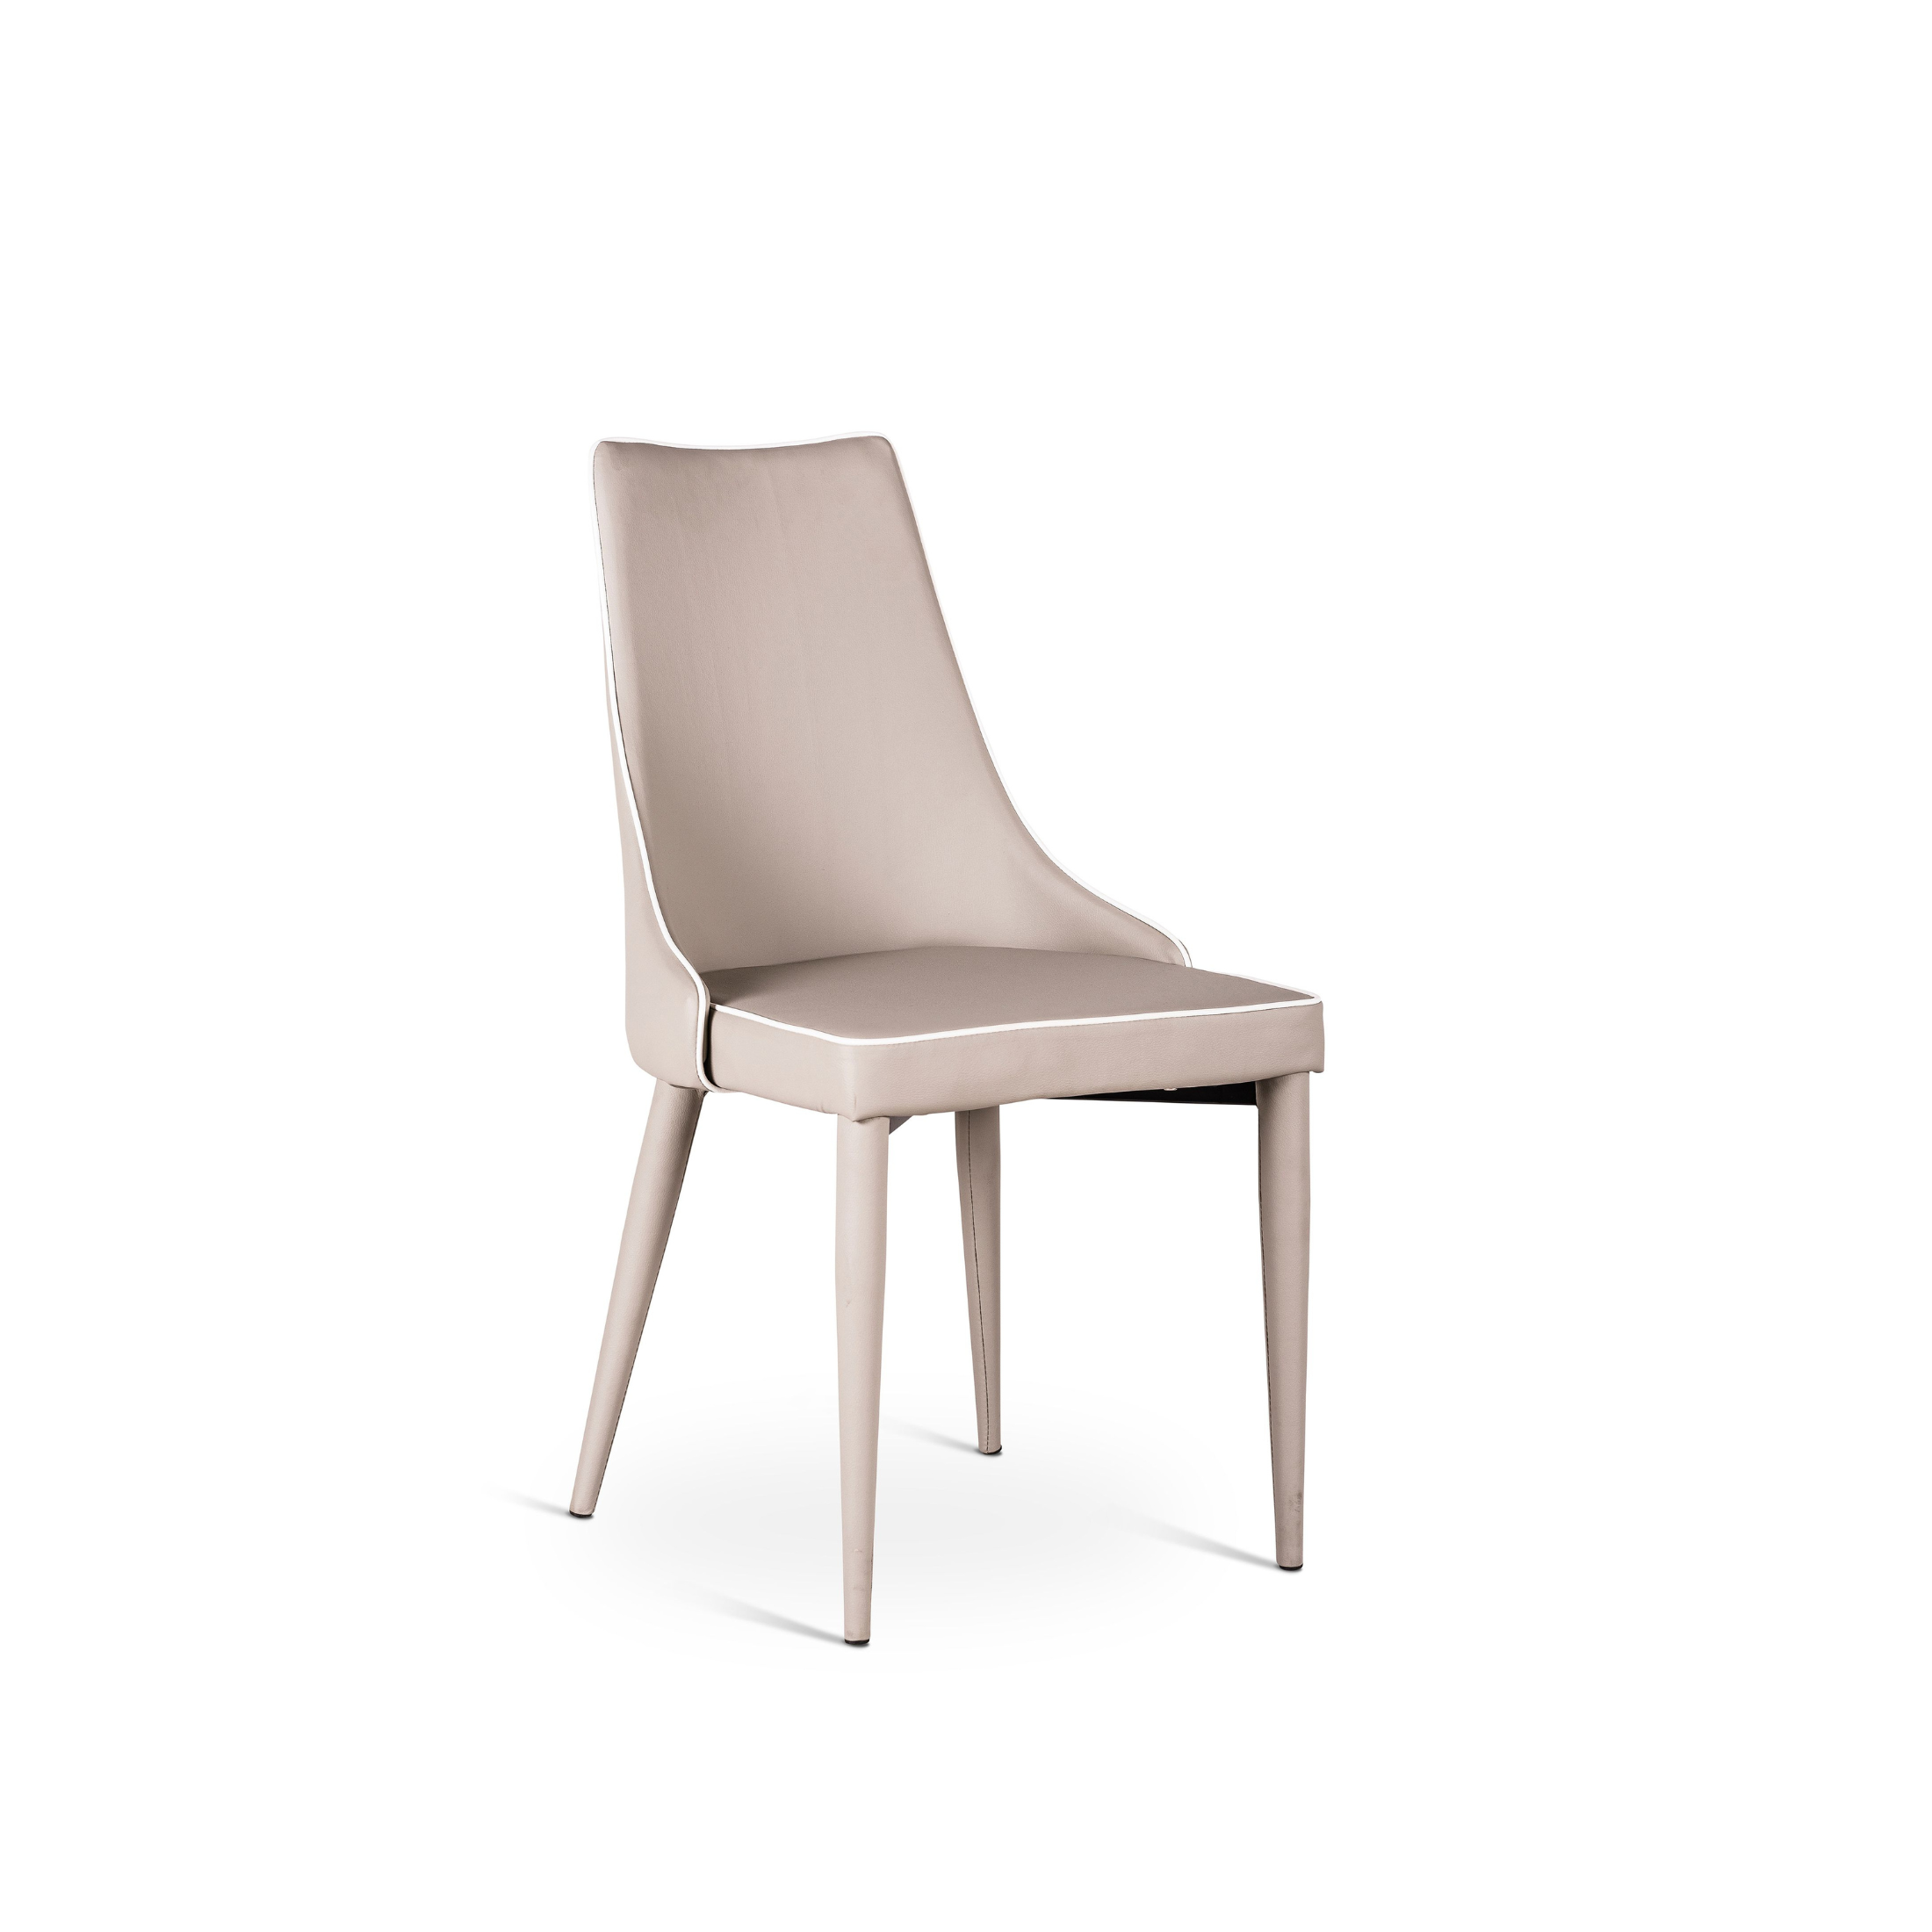 Silla acolchada símil piel "Myriam" sillón moderno 46x46 cm 91h